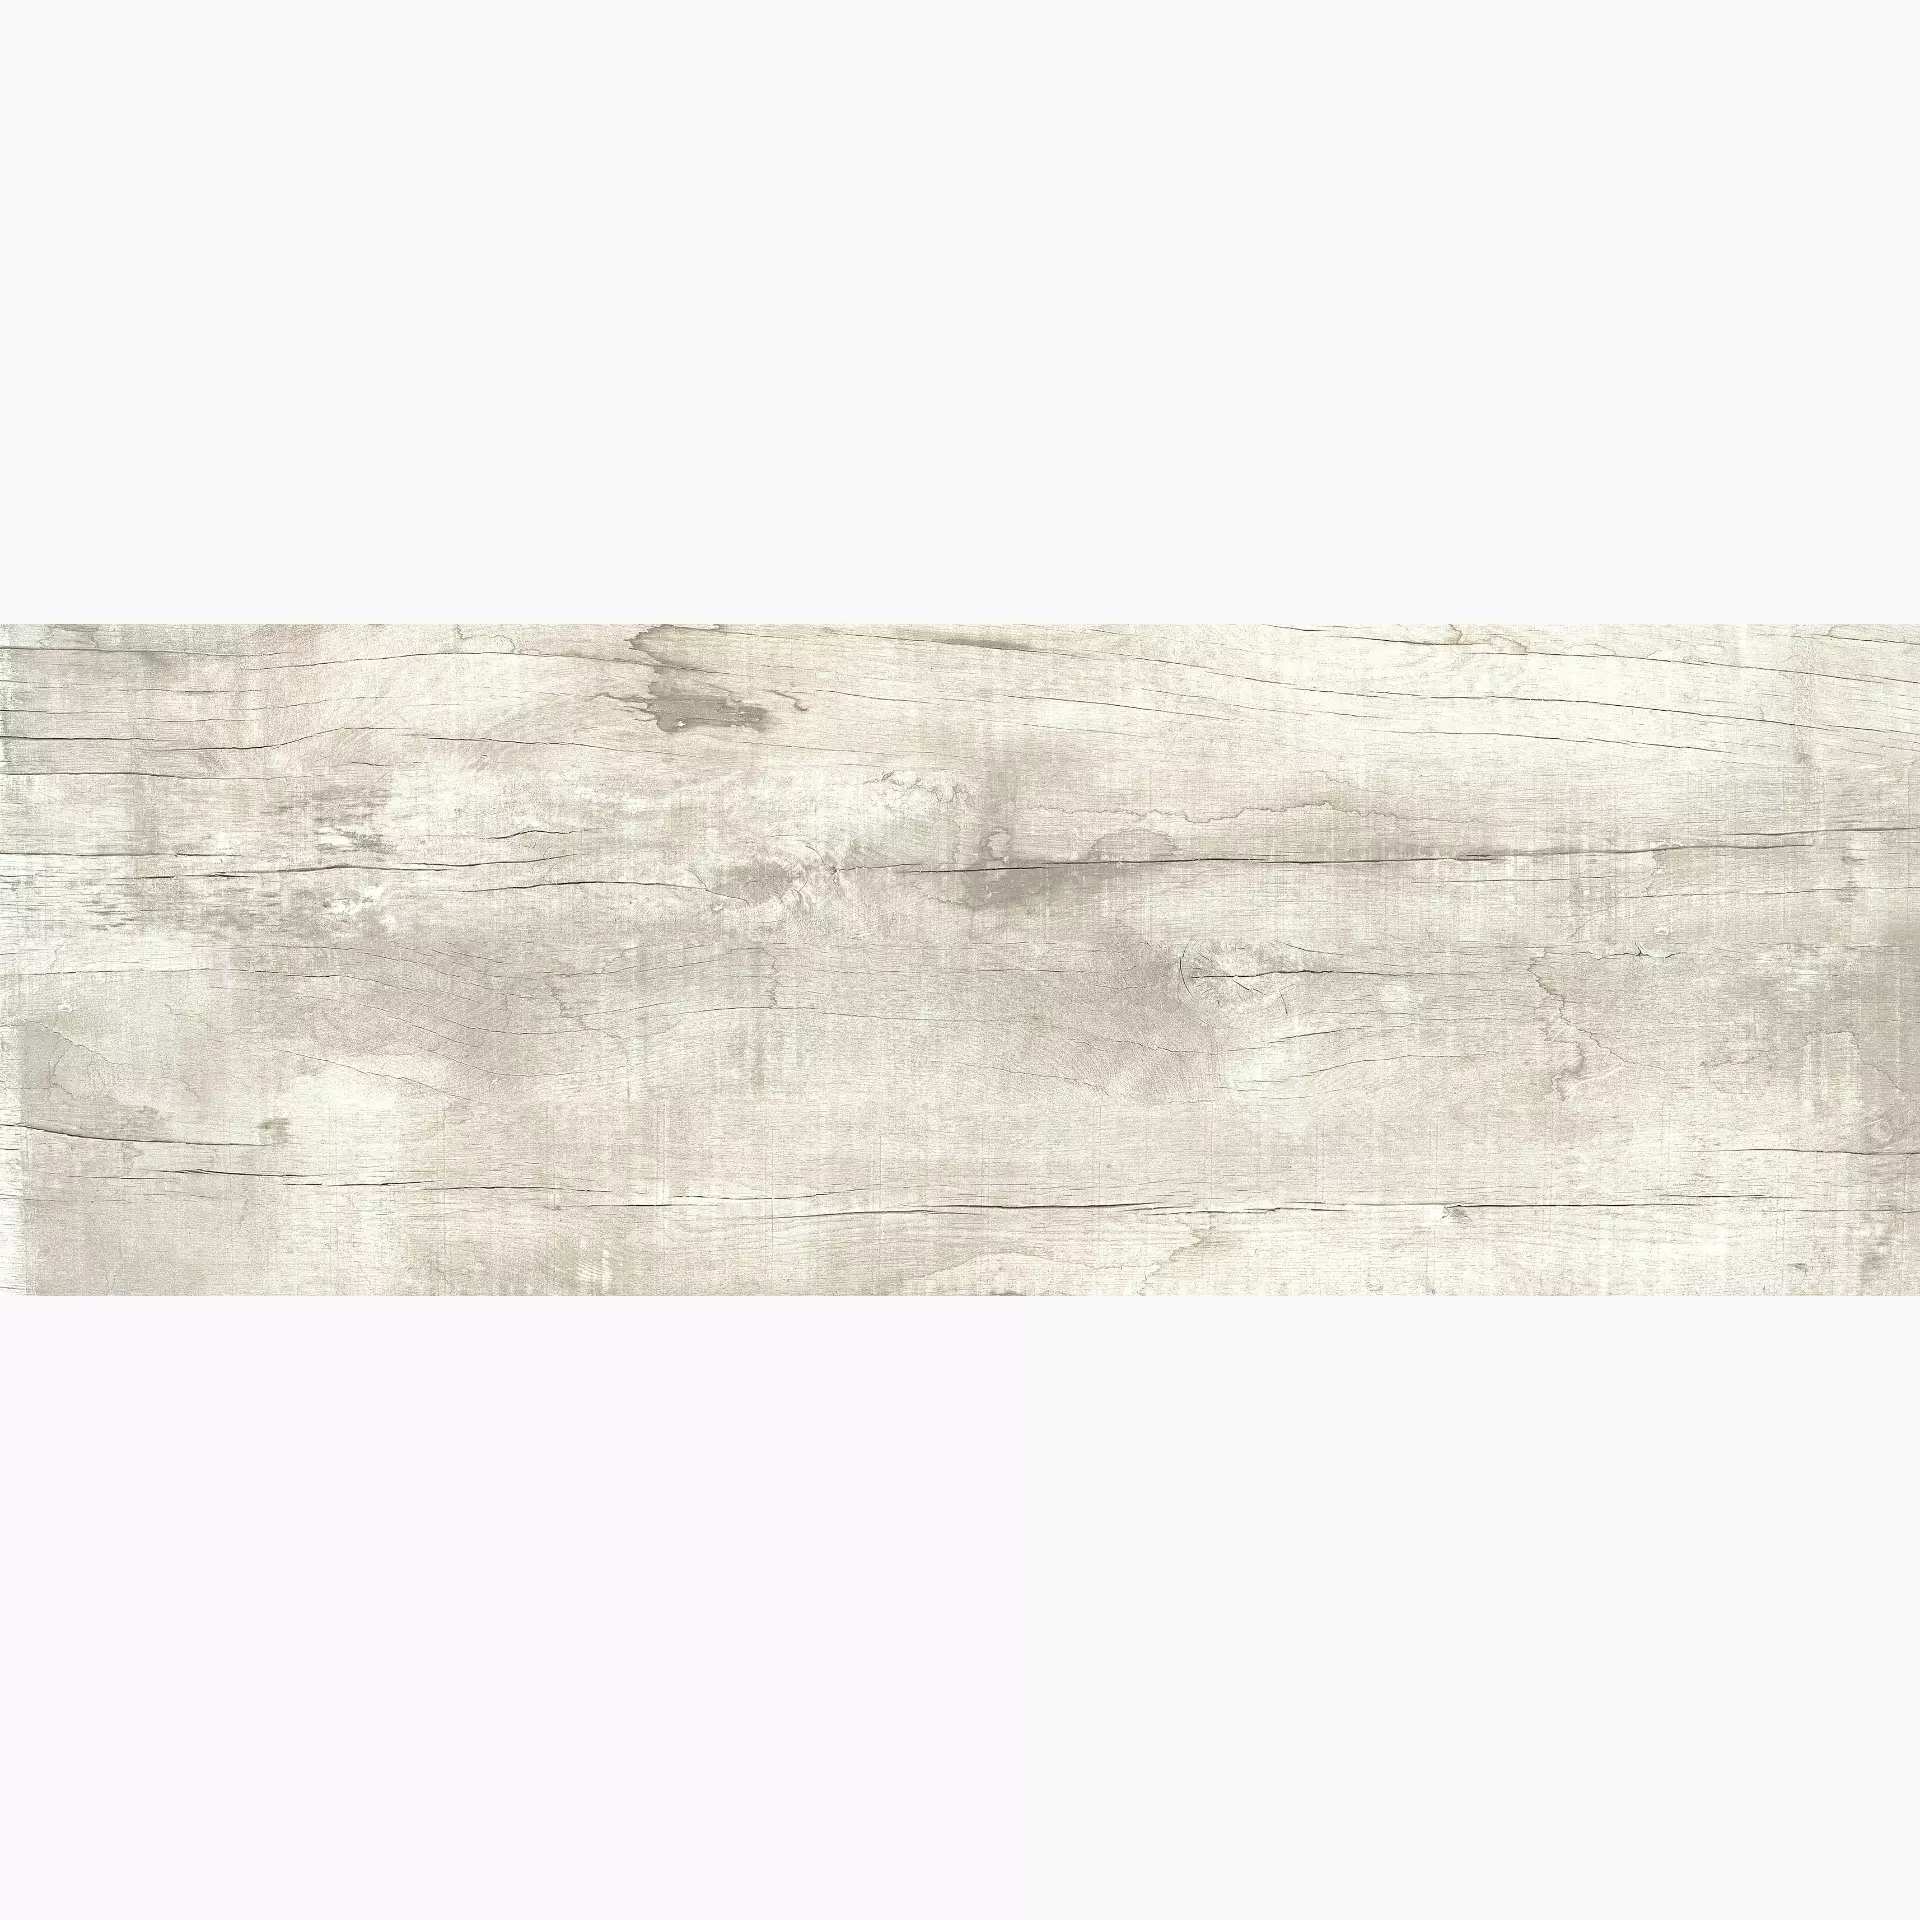 La Faenza Nirvana White Natural Slate Cut Matt 168484 60x180cm rectified 10mm - NIRVANA 18W